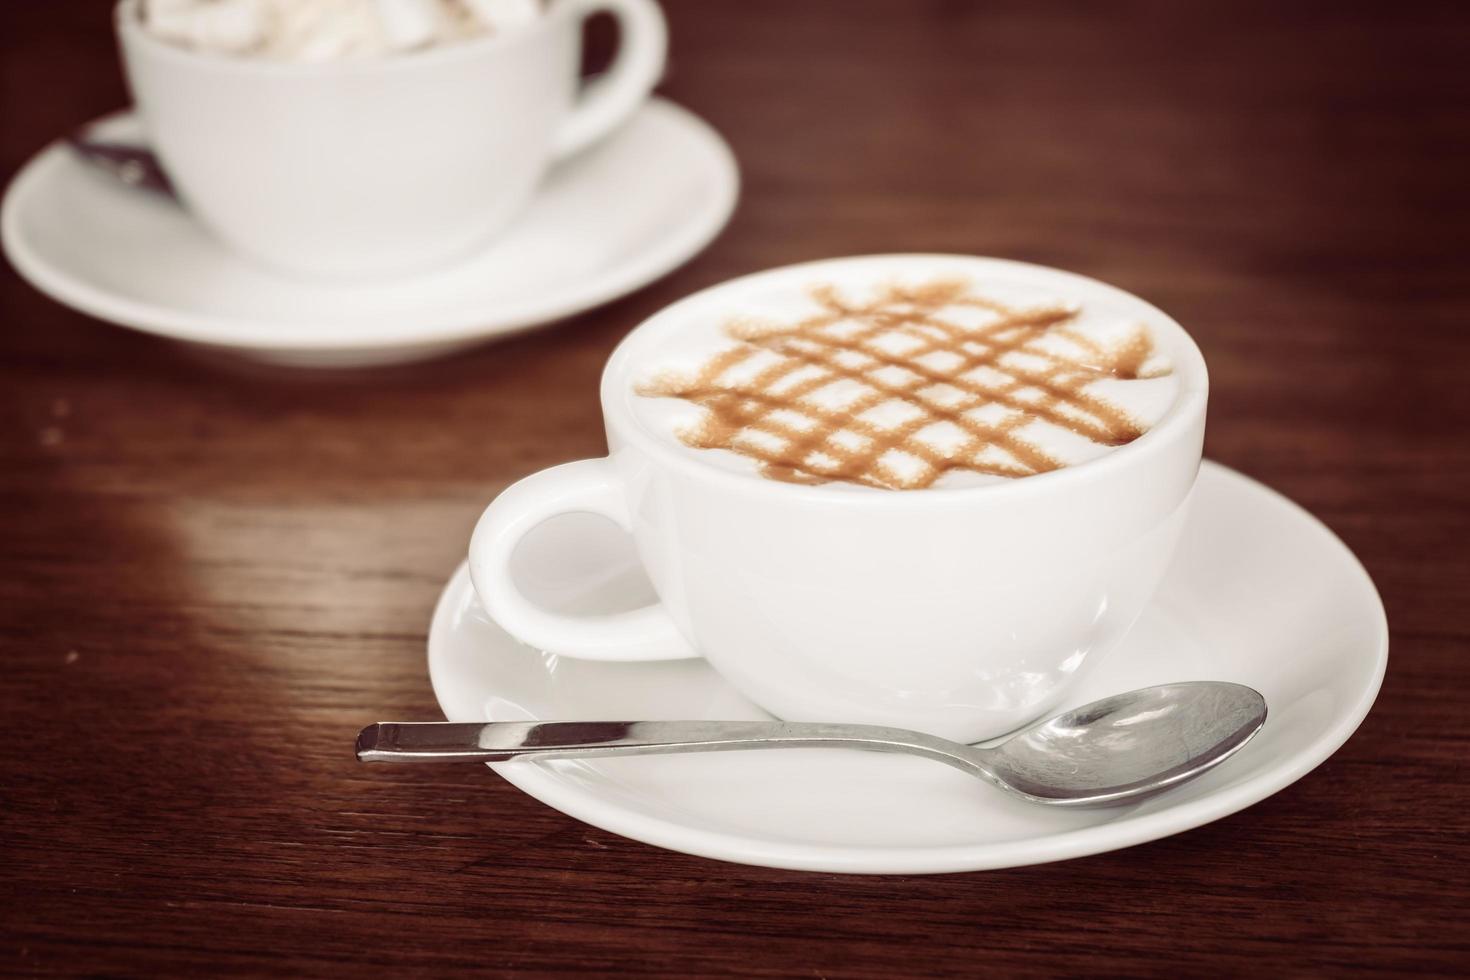 Hot caramel coffee cup latte photo